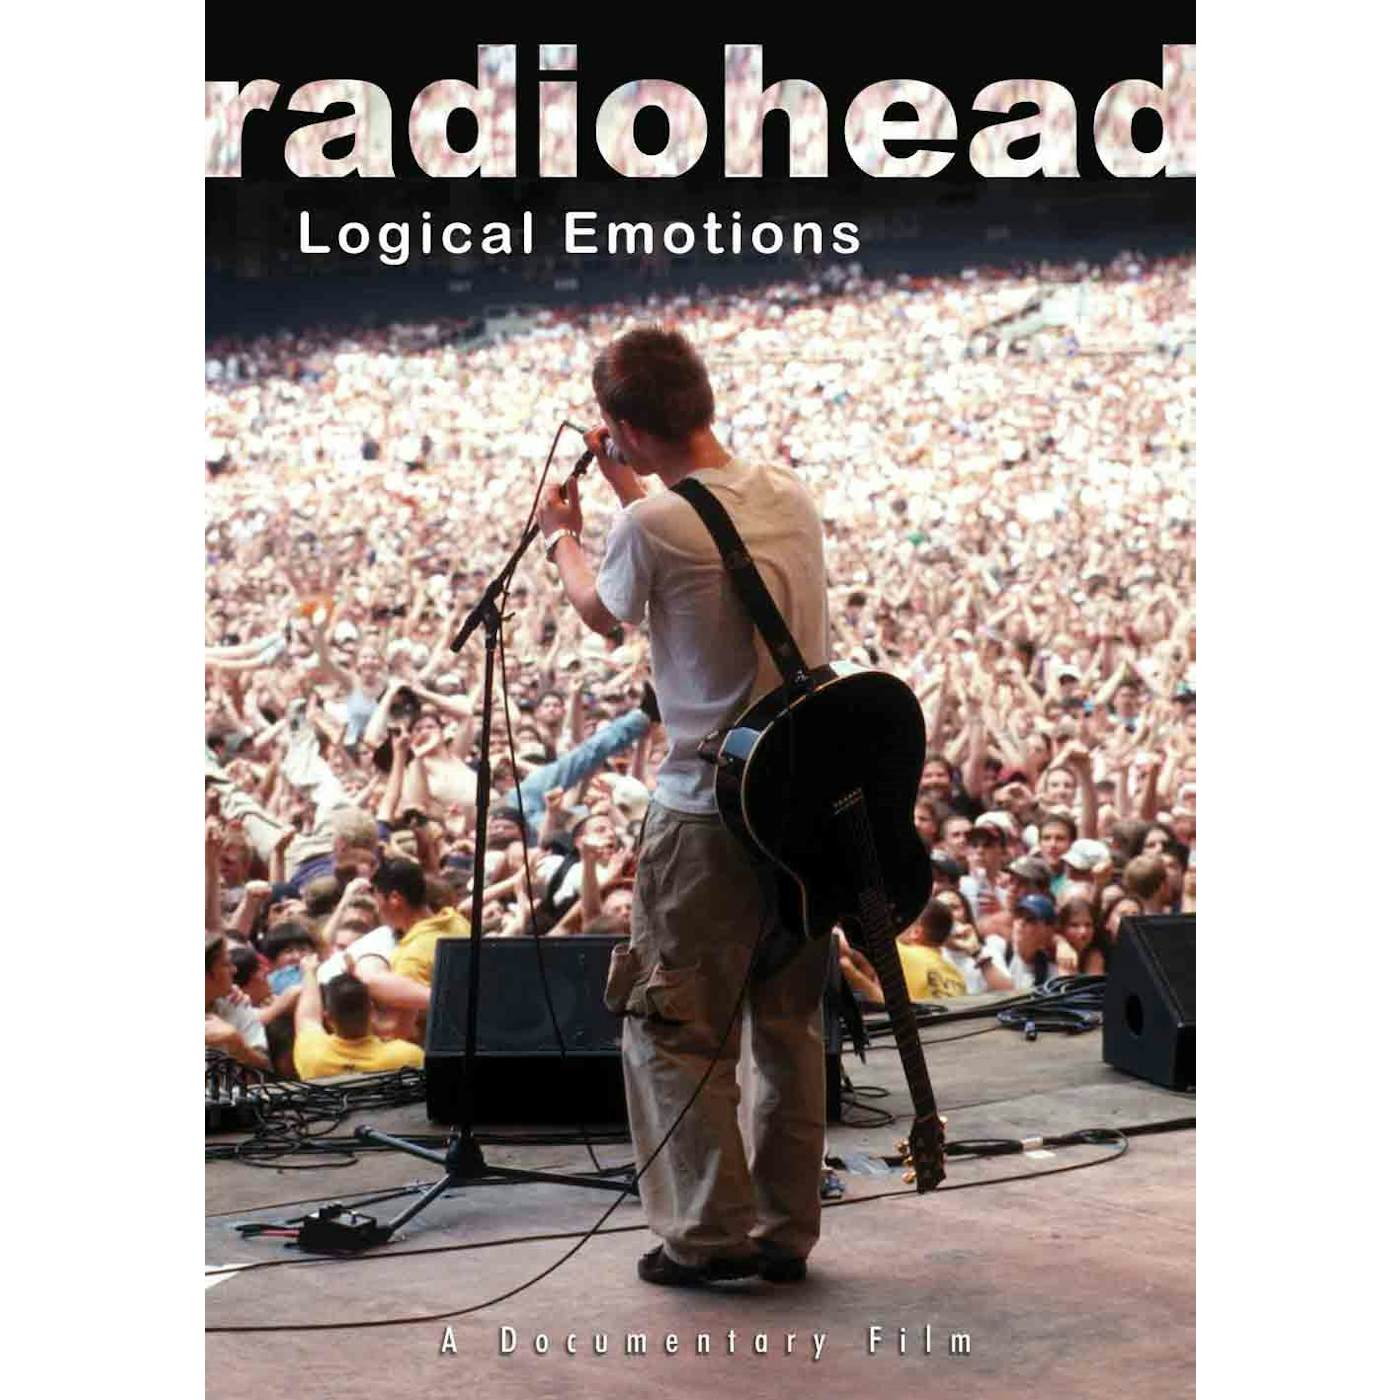 Radiohead DVD - Radiohead - Logical Emotions